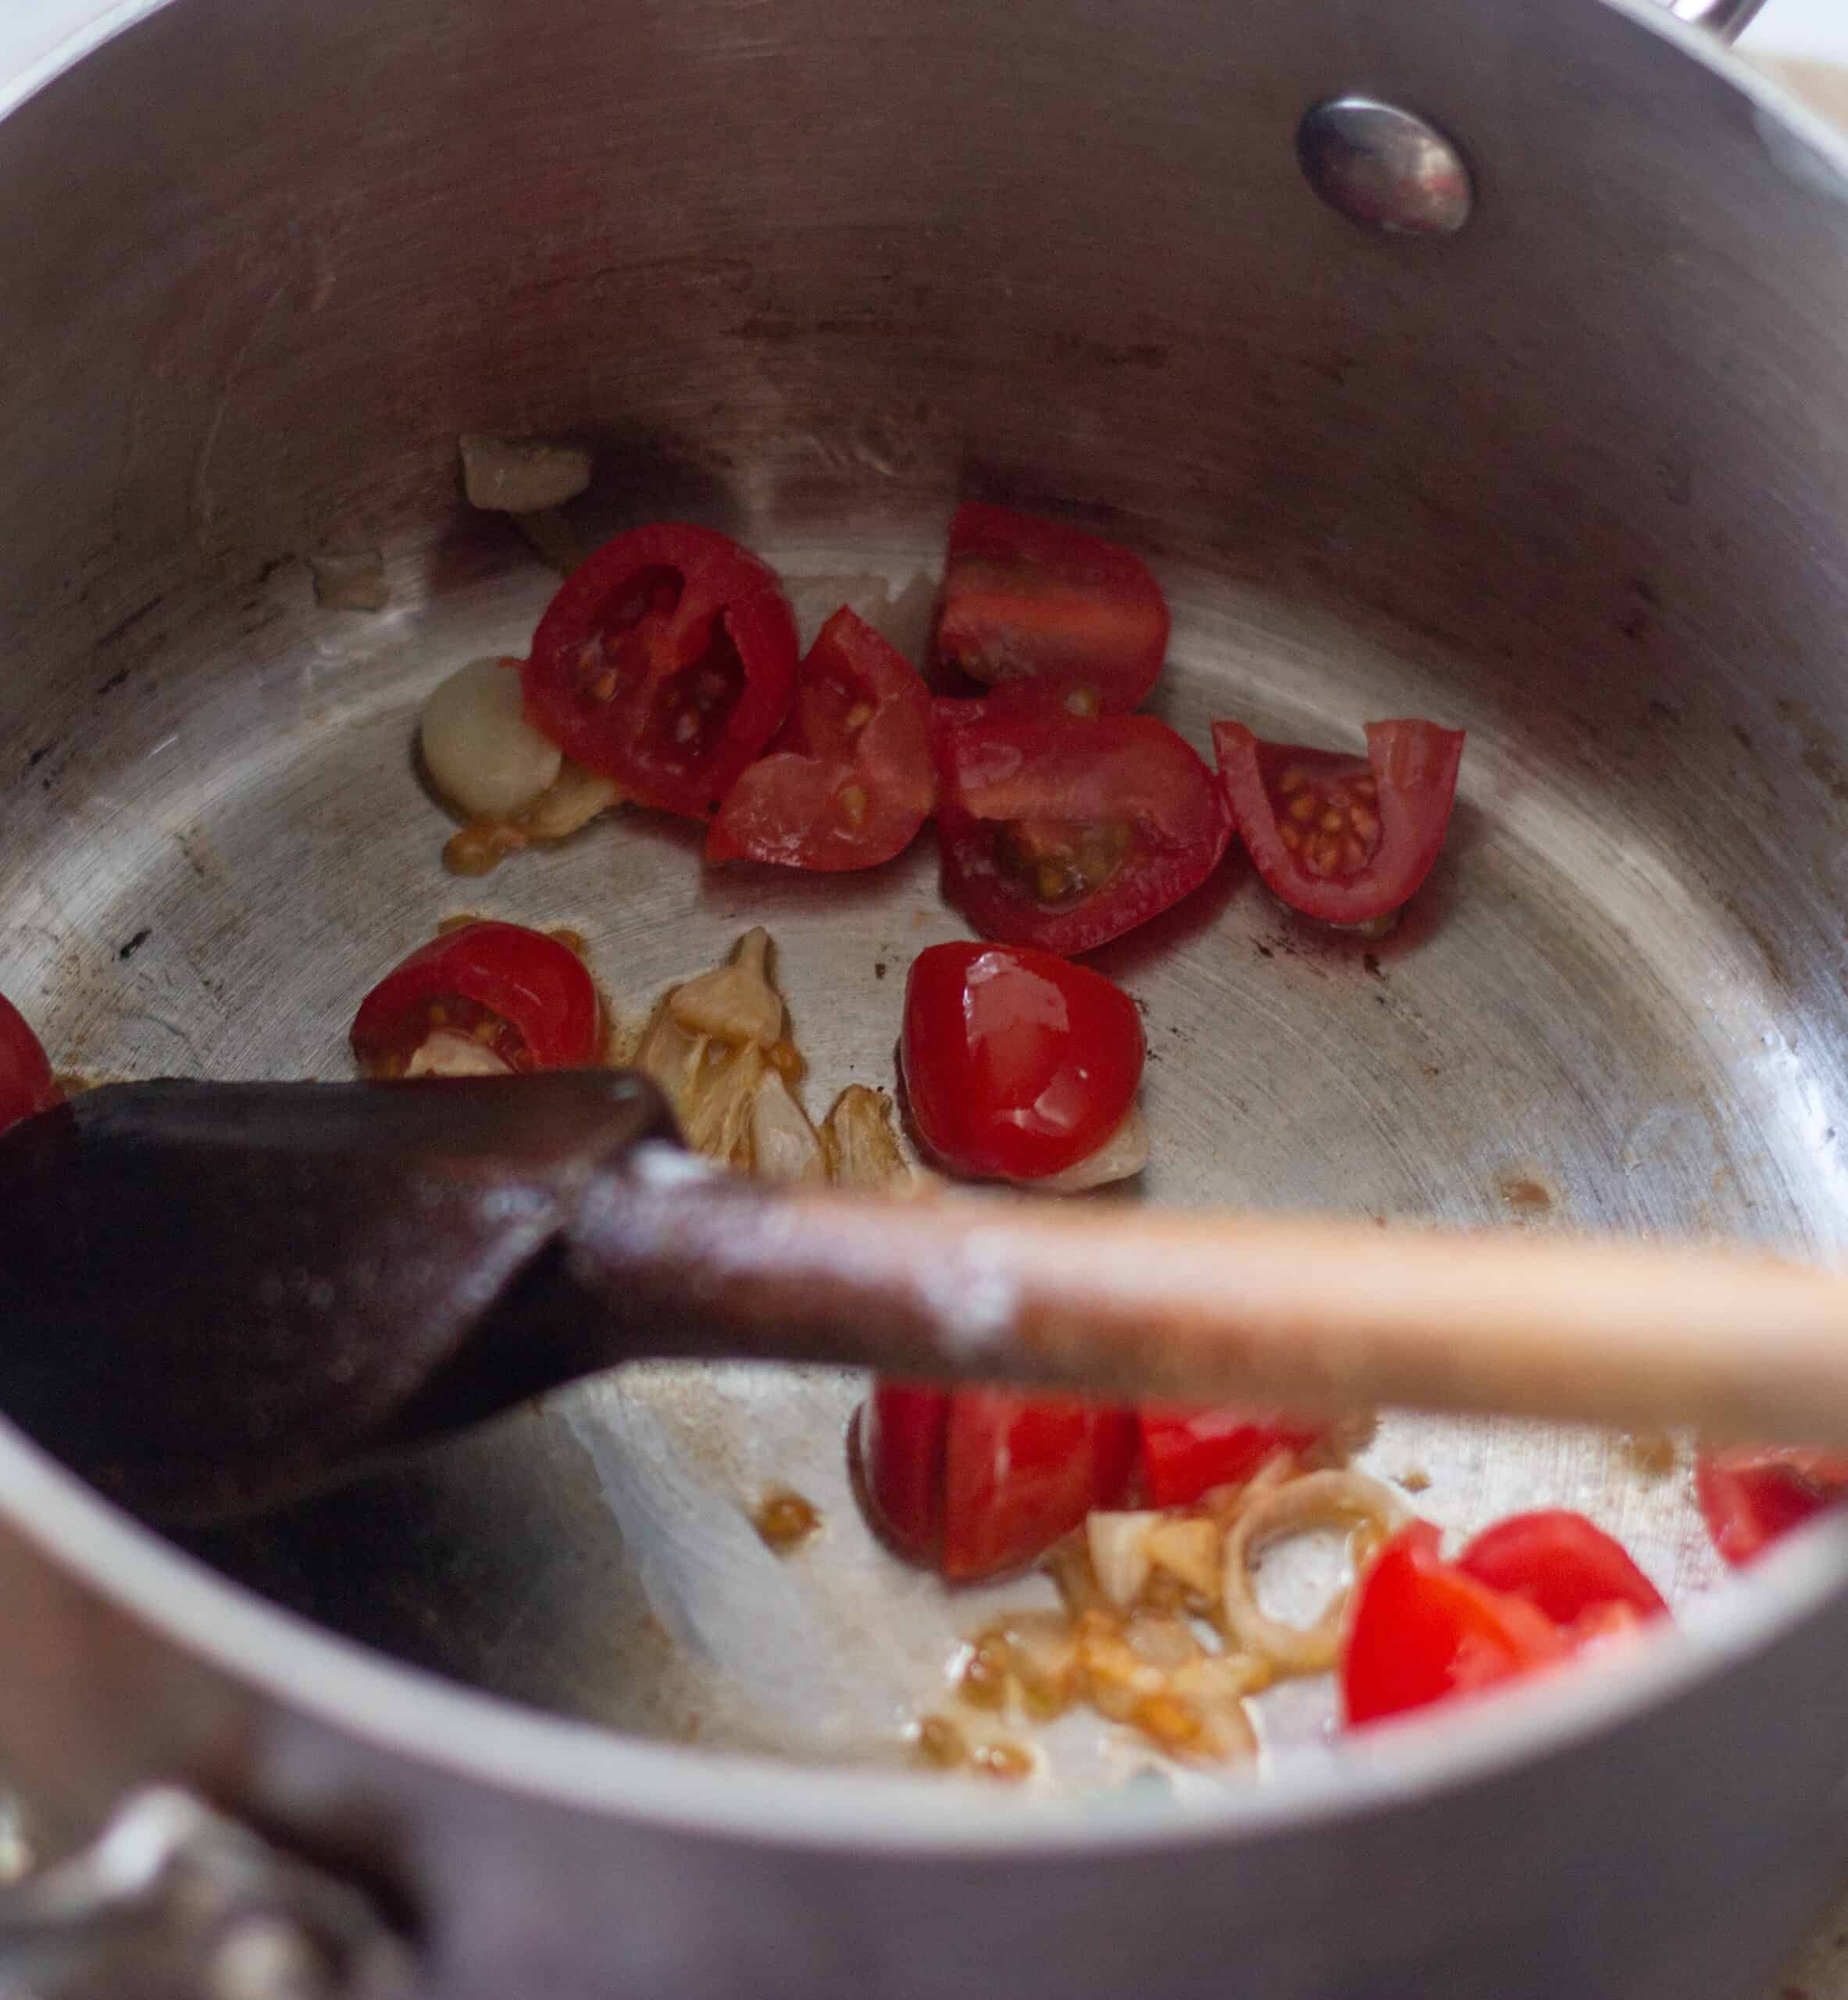 Adding tomatoes to sauteed garlic